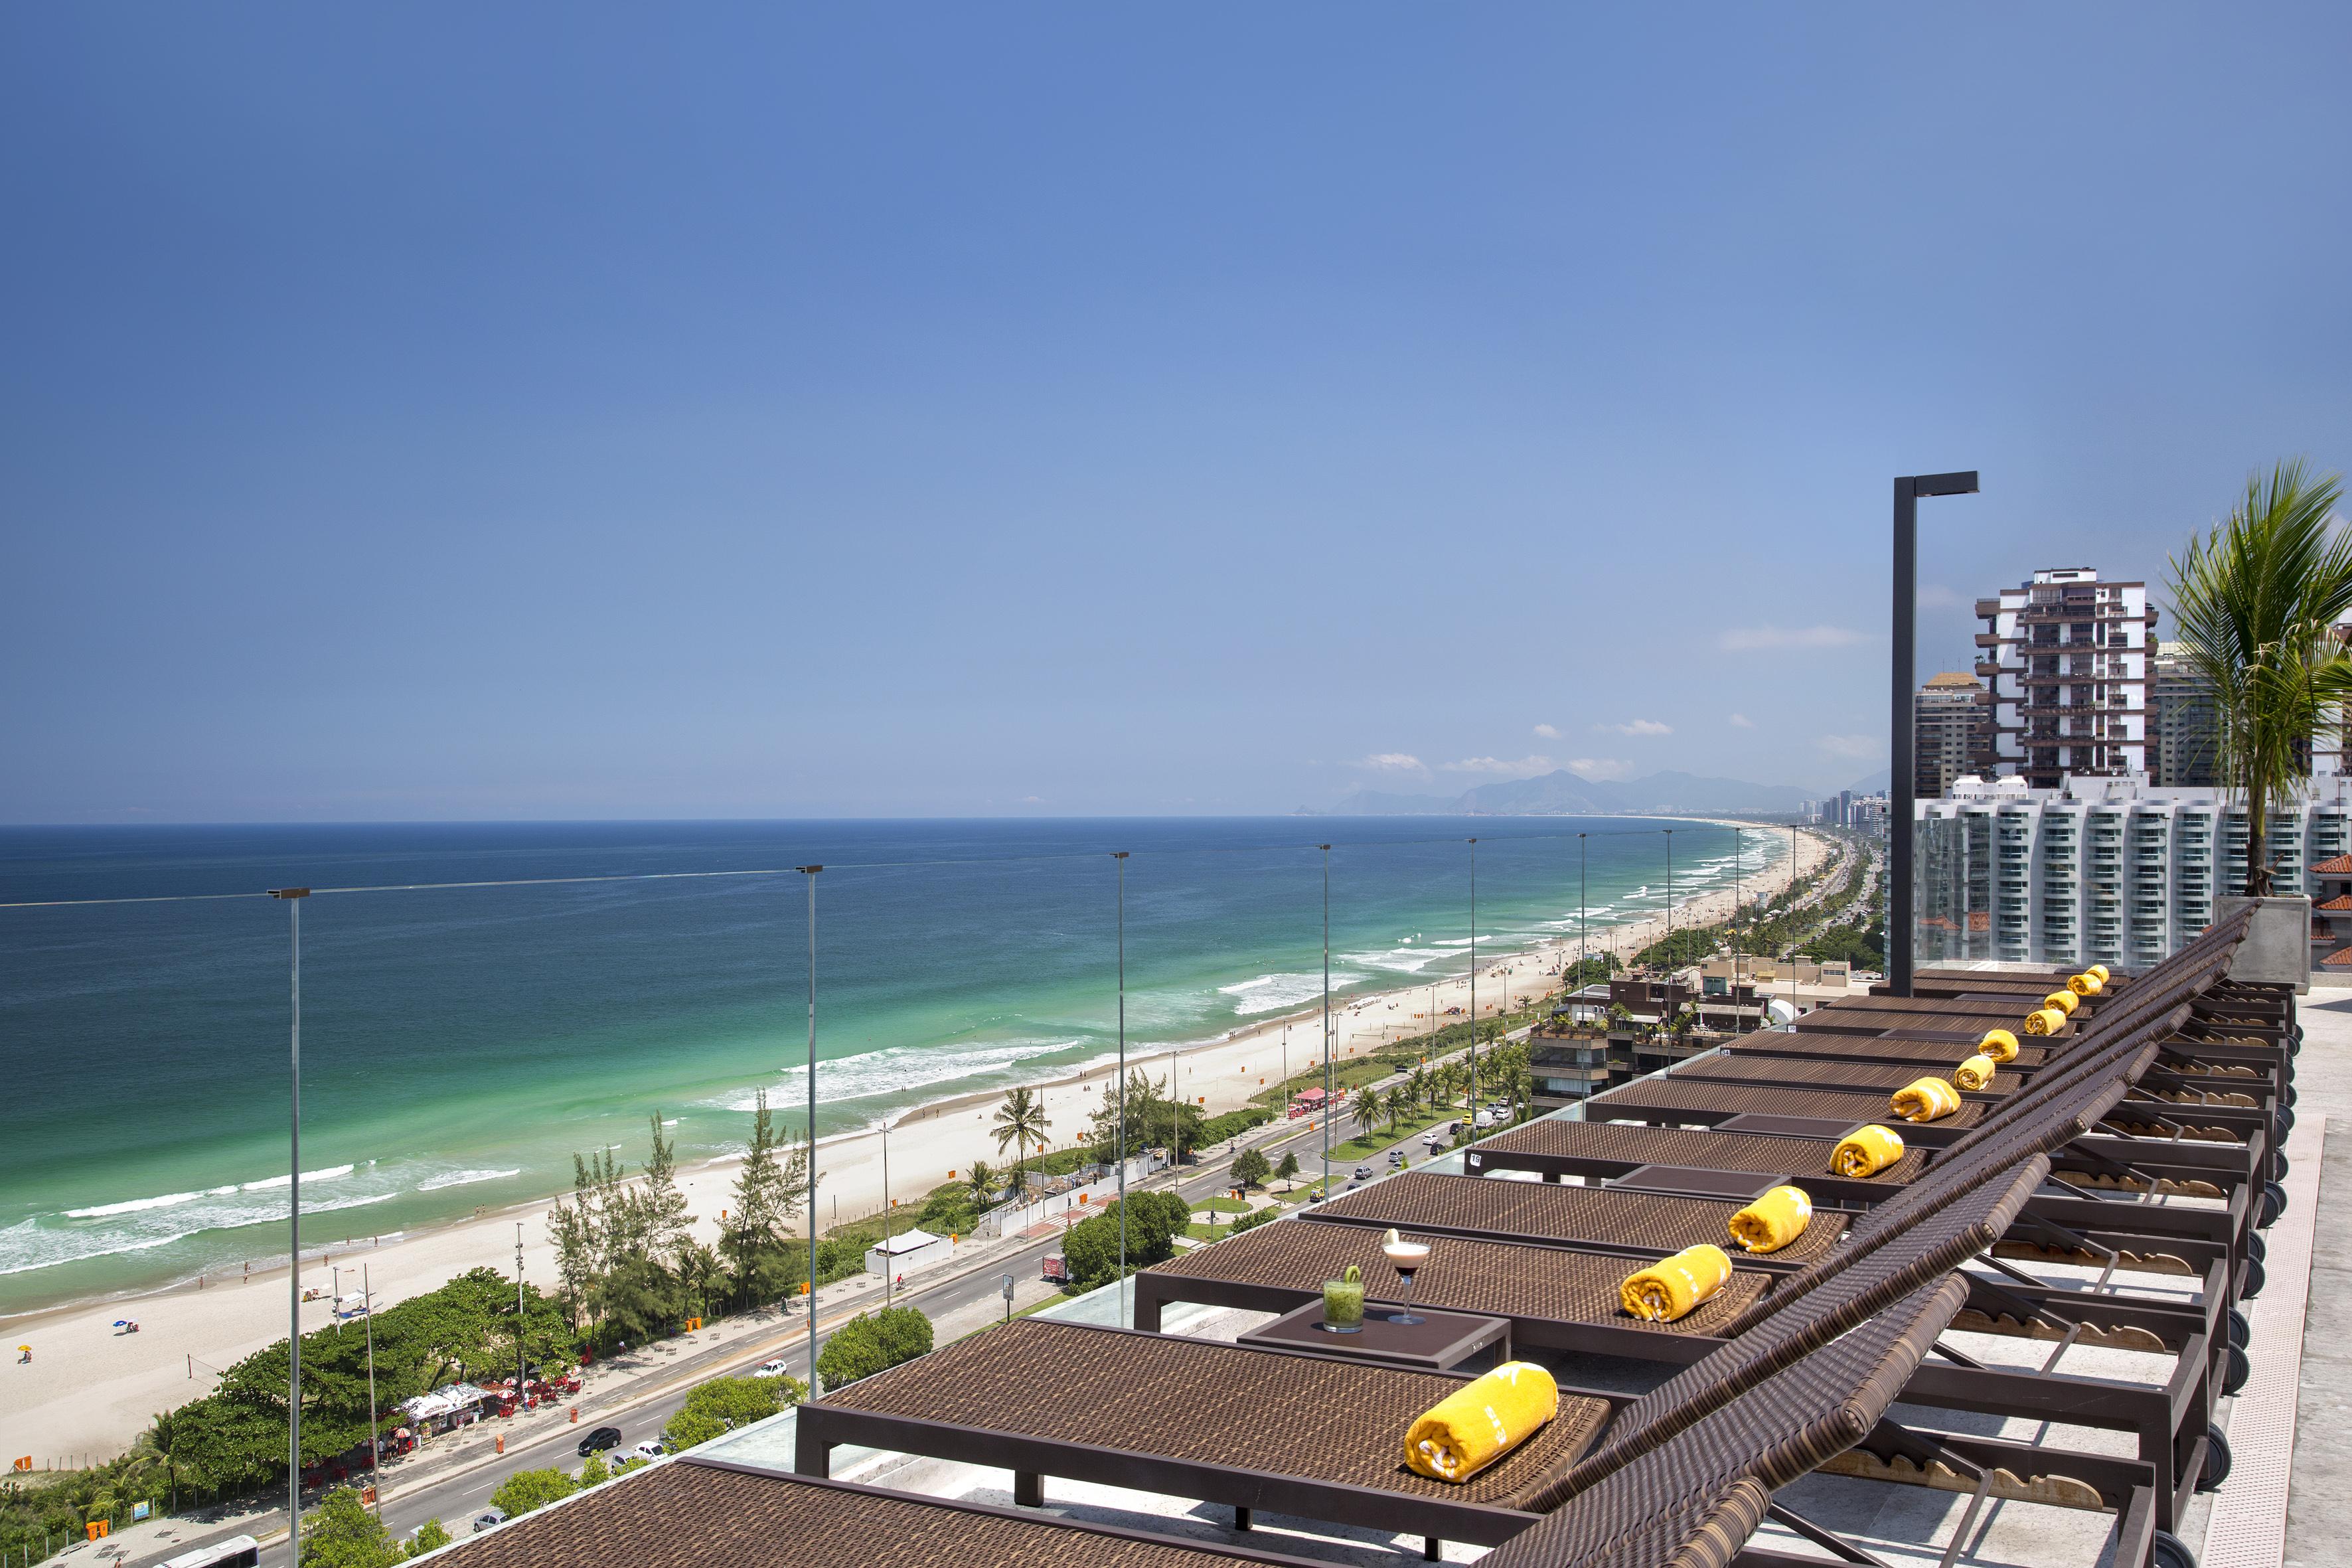 Windsor Oceanico Hotel Рио-де-Жанейро Экстерьер фото